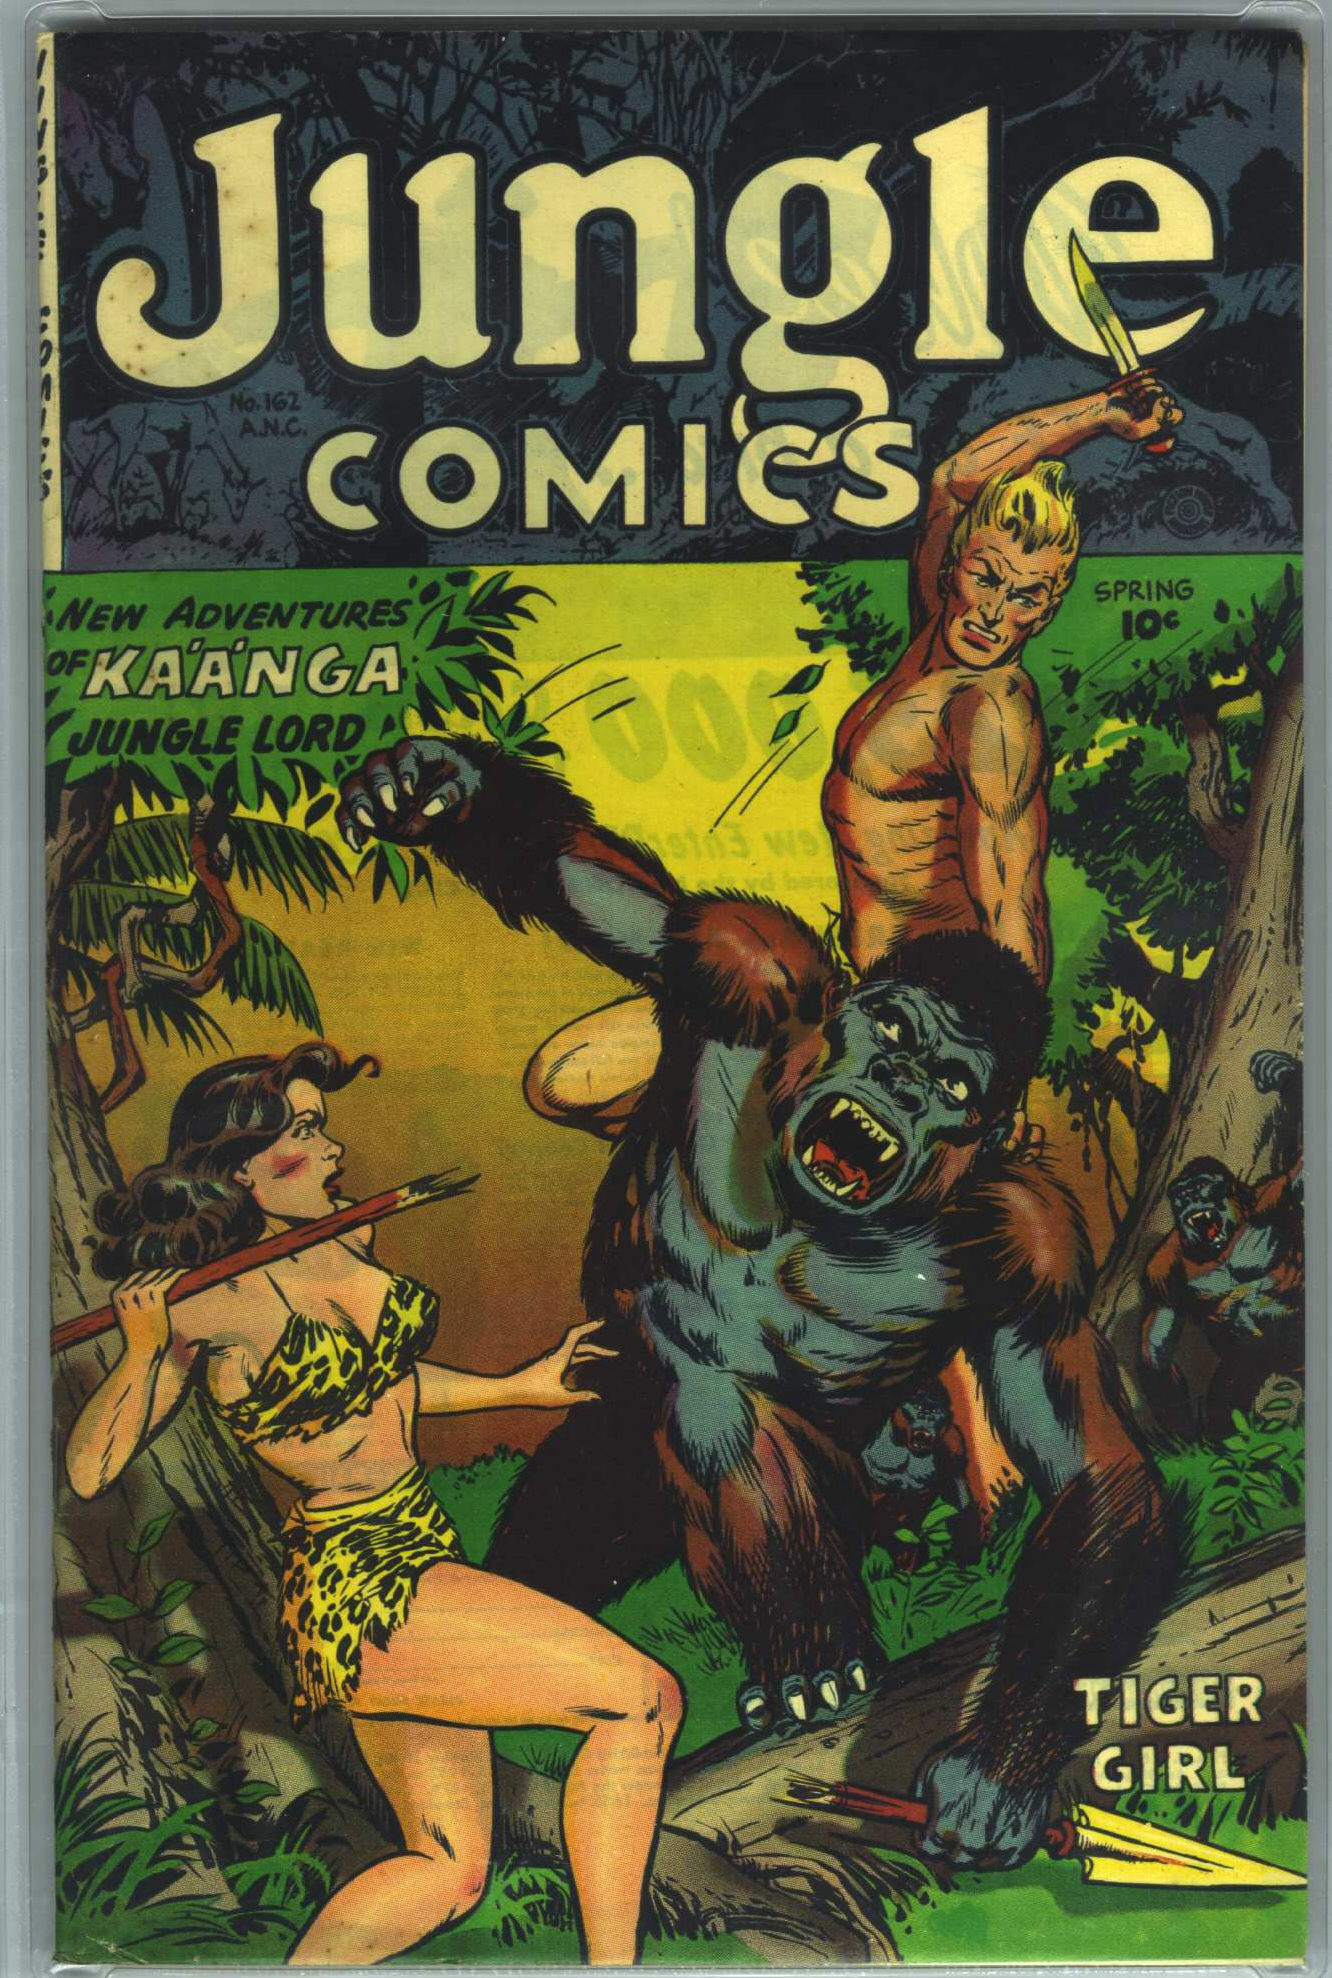 Read online Jungle Comics comic -  Issue #162 - 1